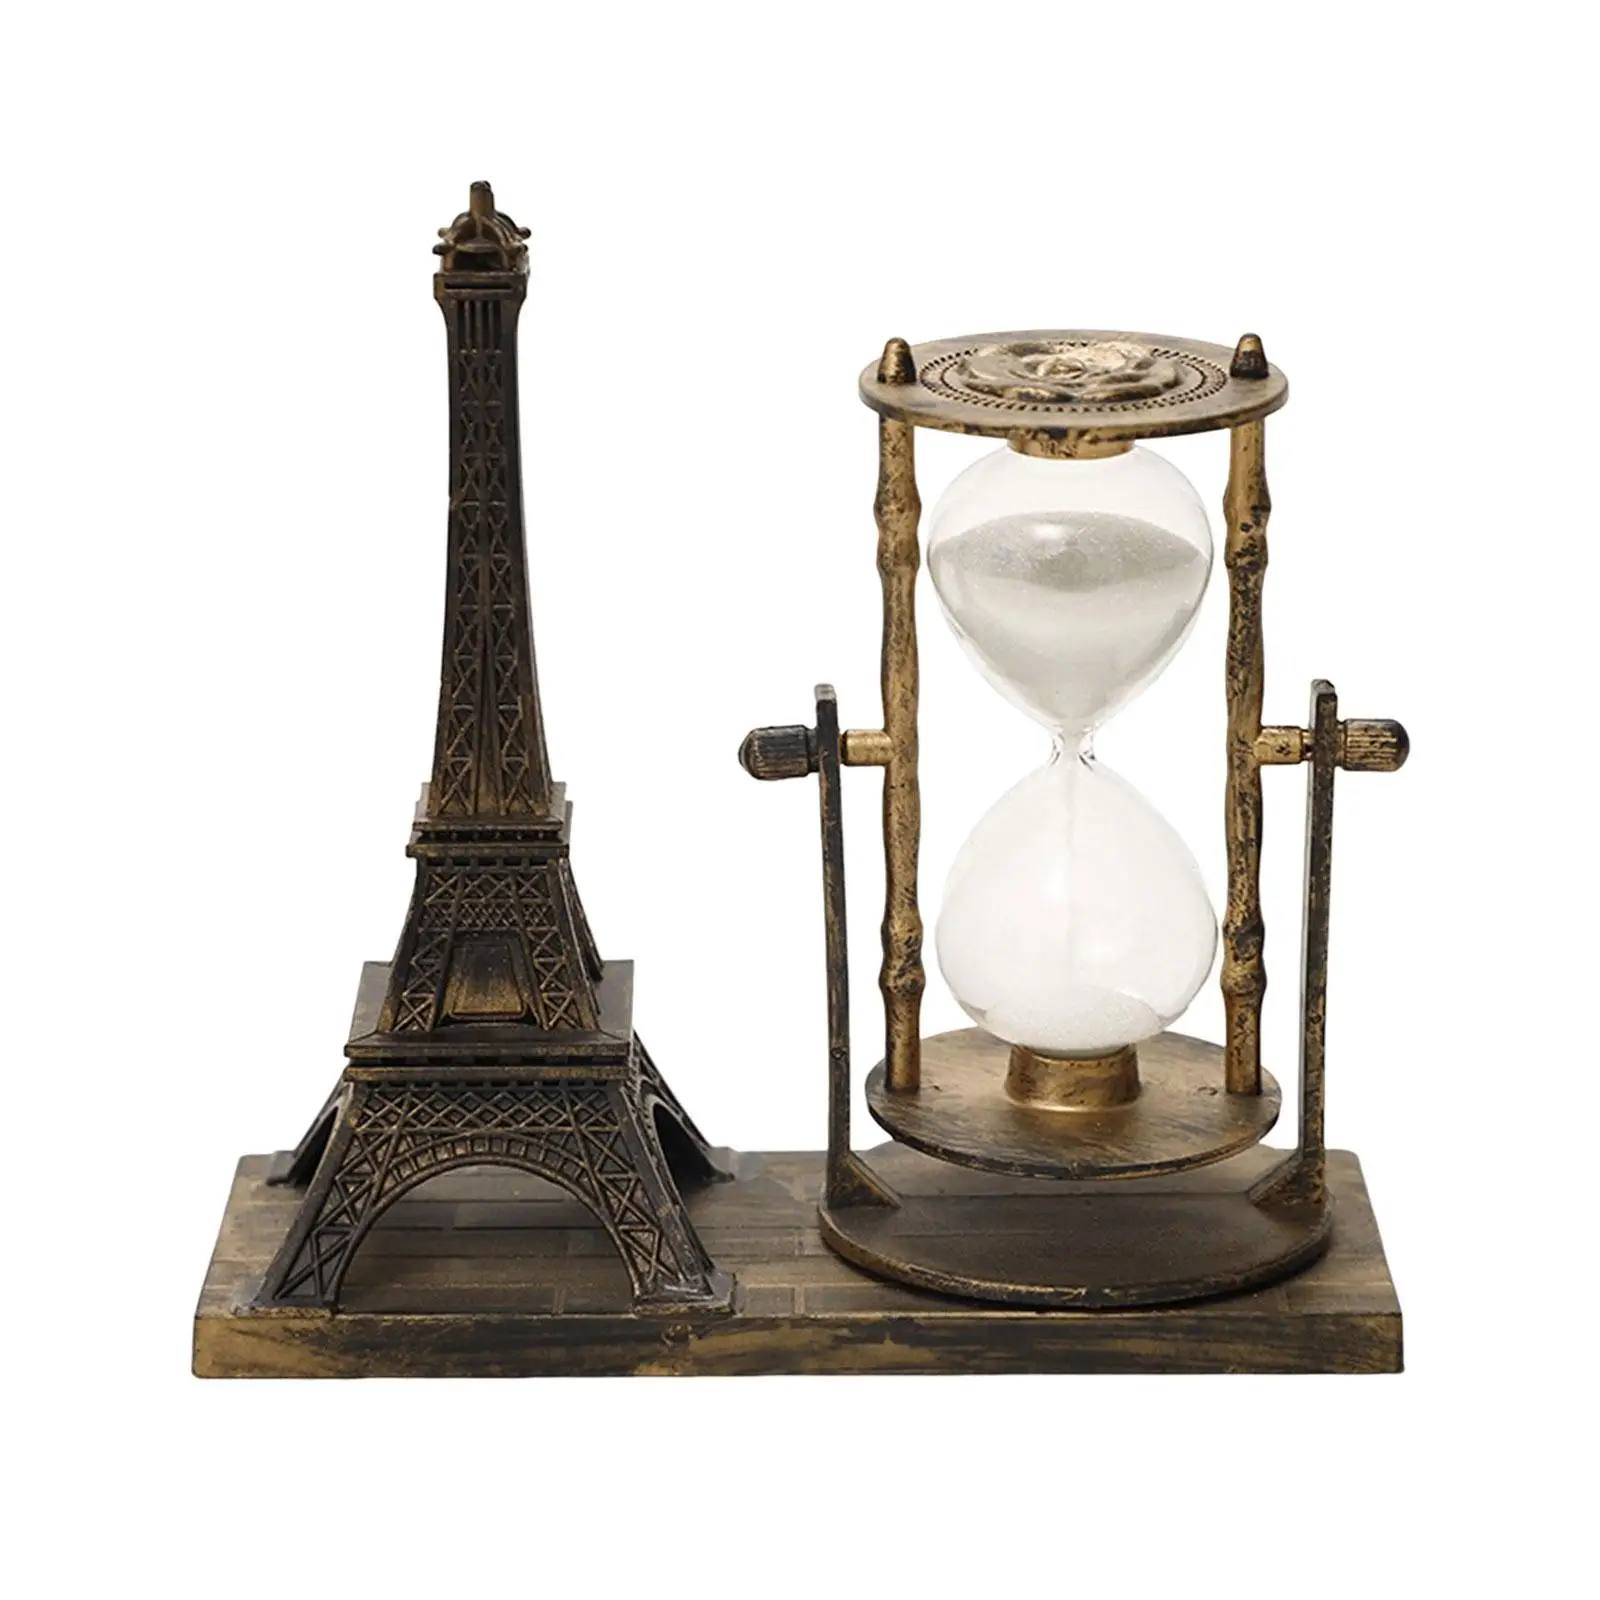 Retro Style Iron Hourglass Timer Statue Decor for